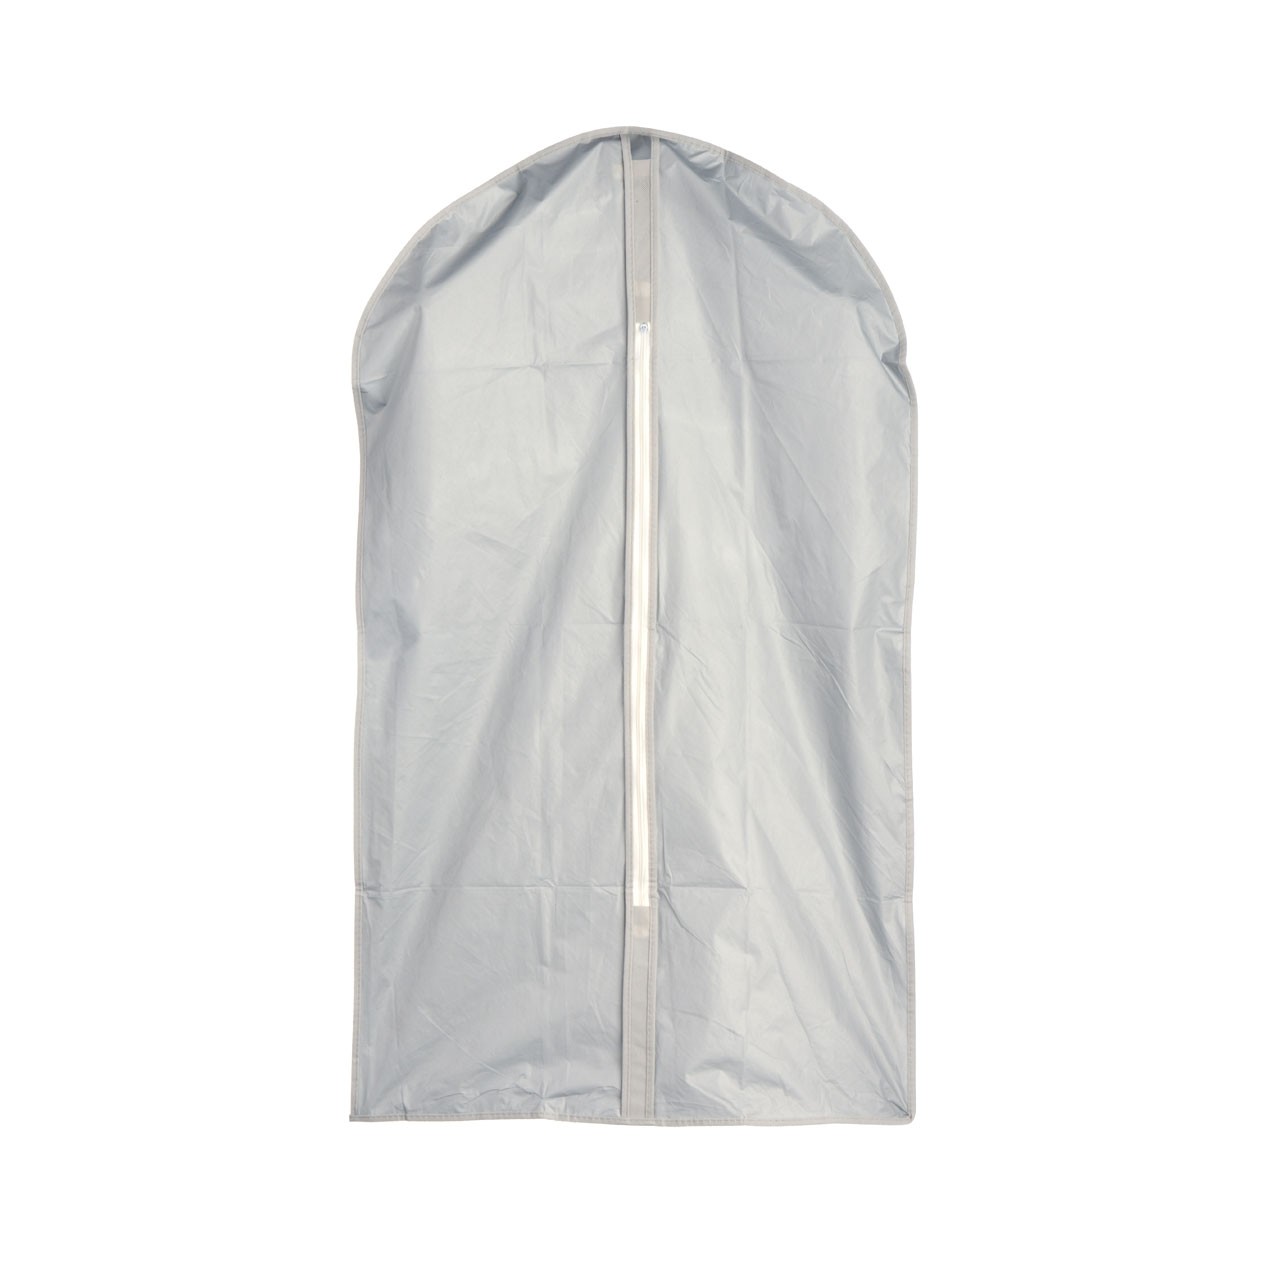 1-Piece Suit Storage Cover - Grey